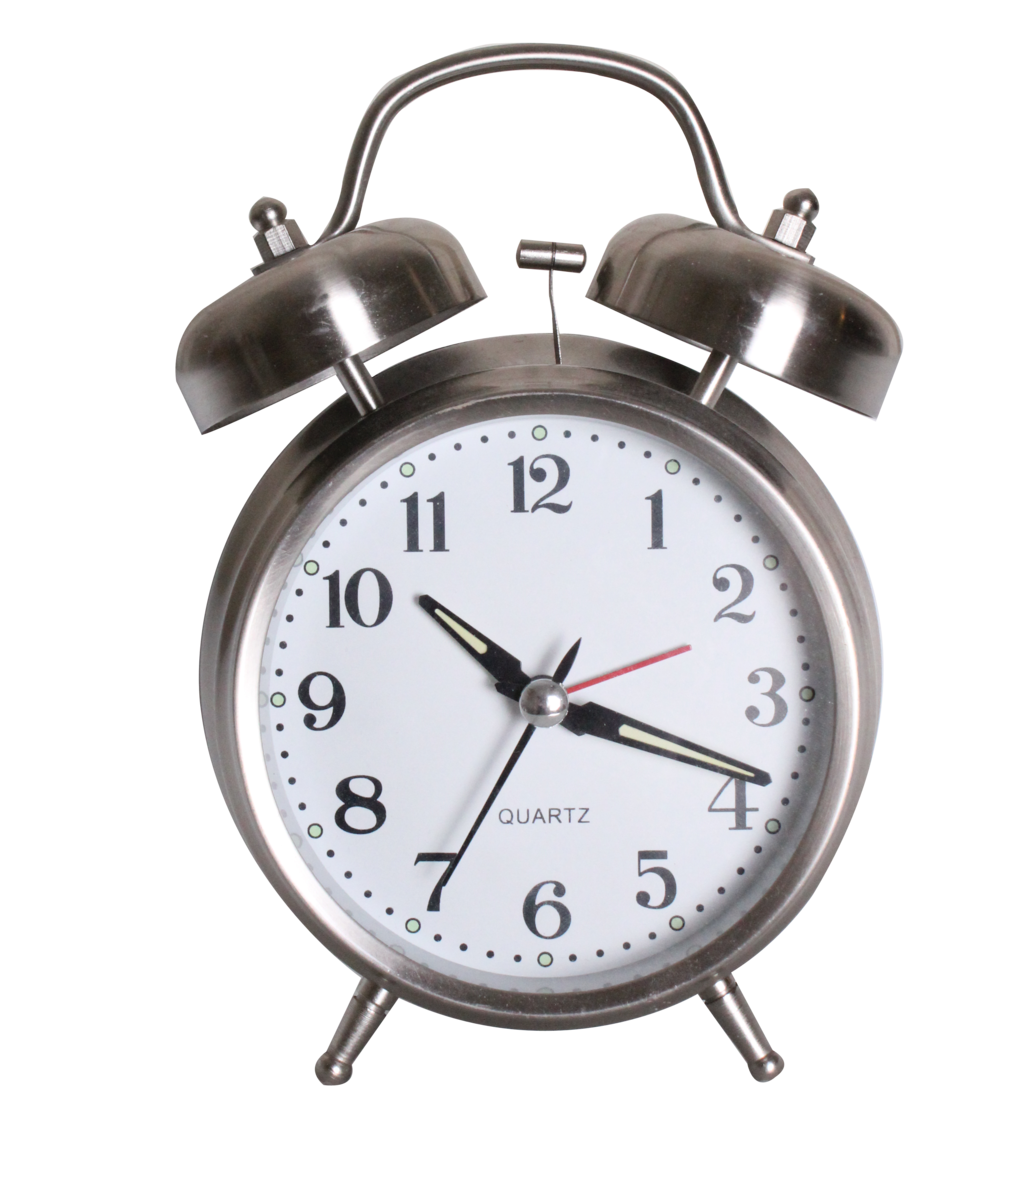 Alarm Clock Transparent PNG